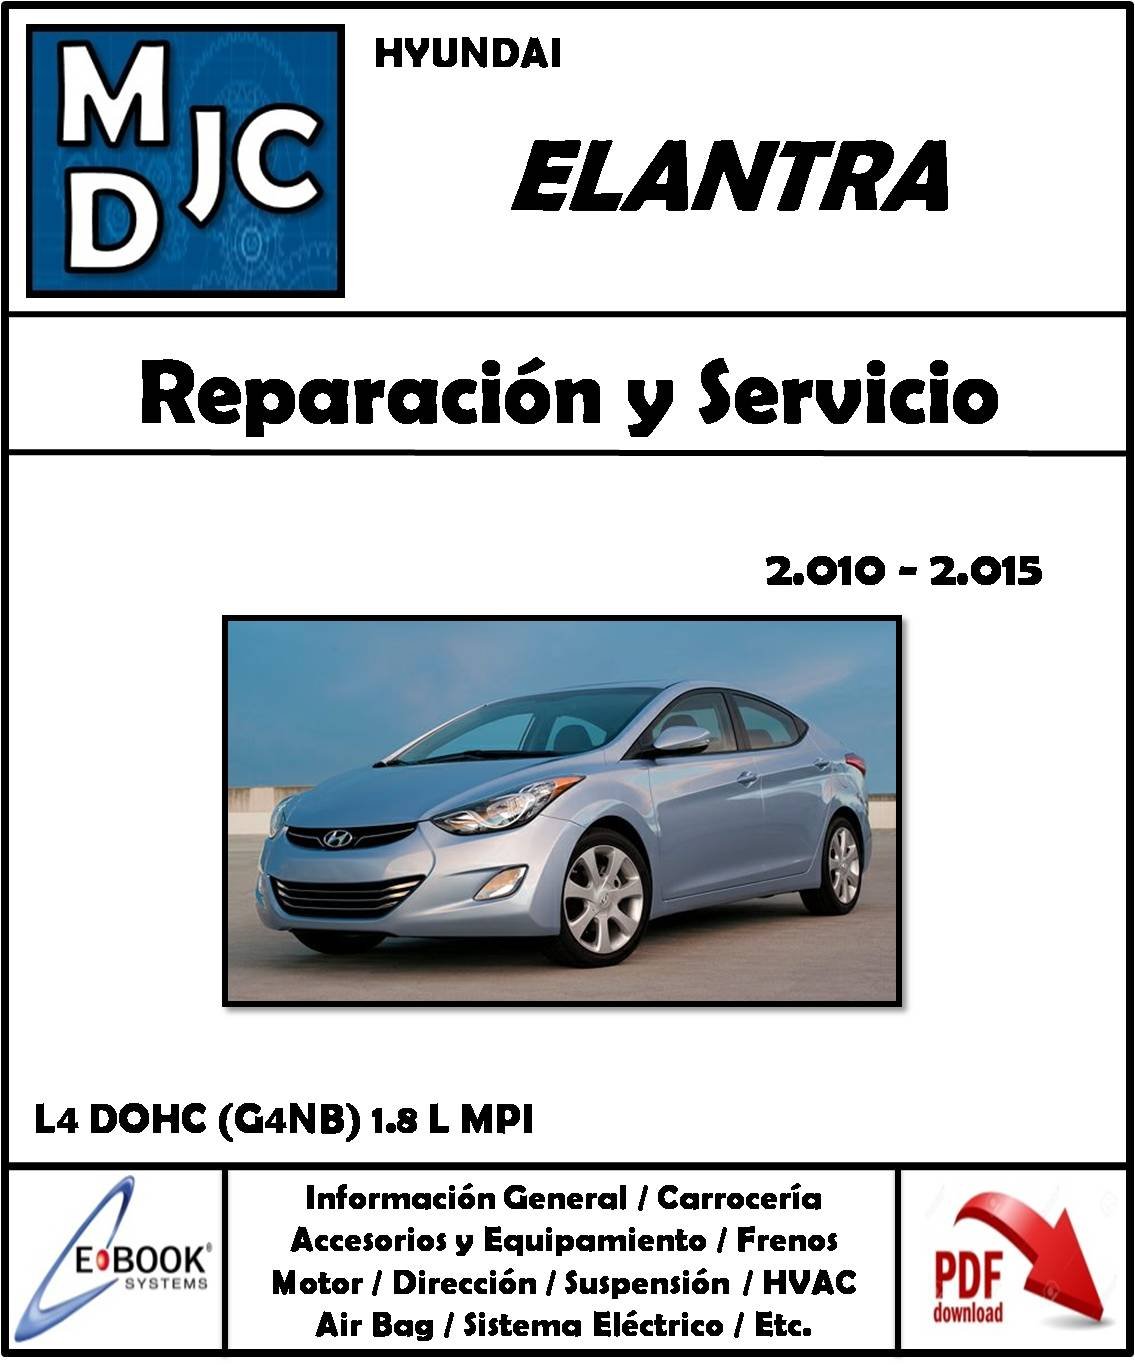 Hyundai Elantra 2010 - 2015